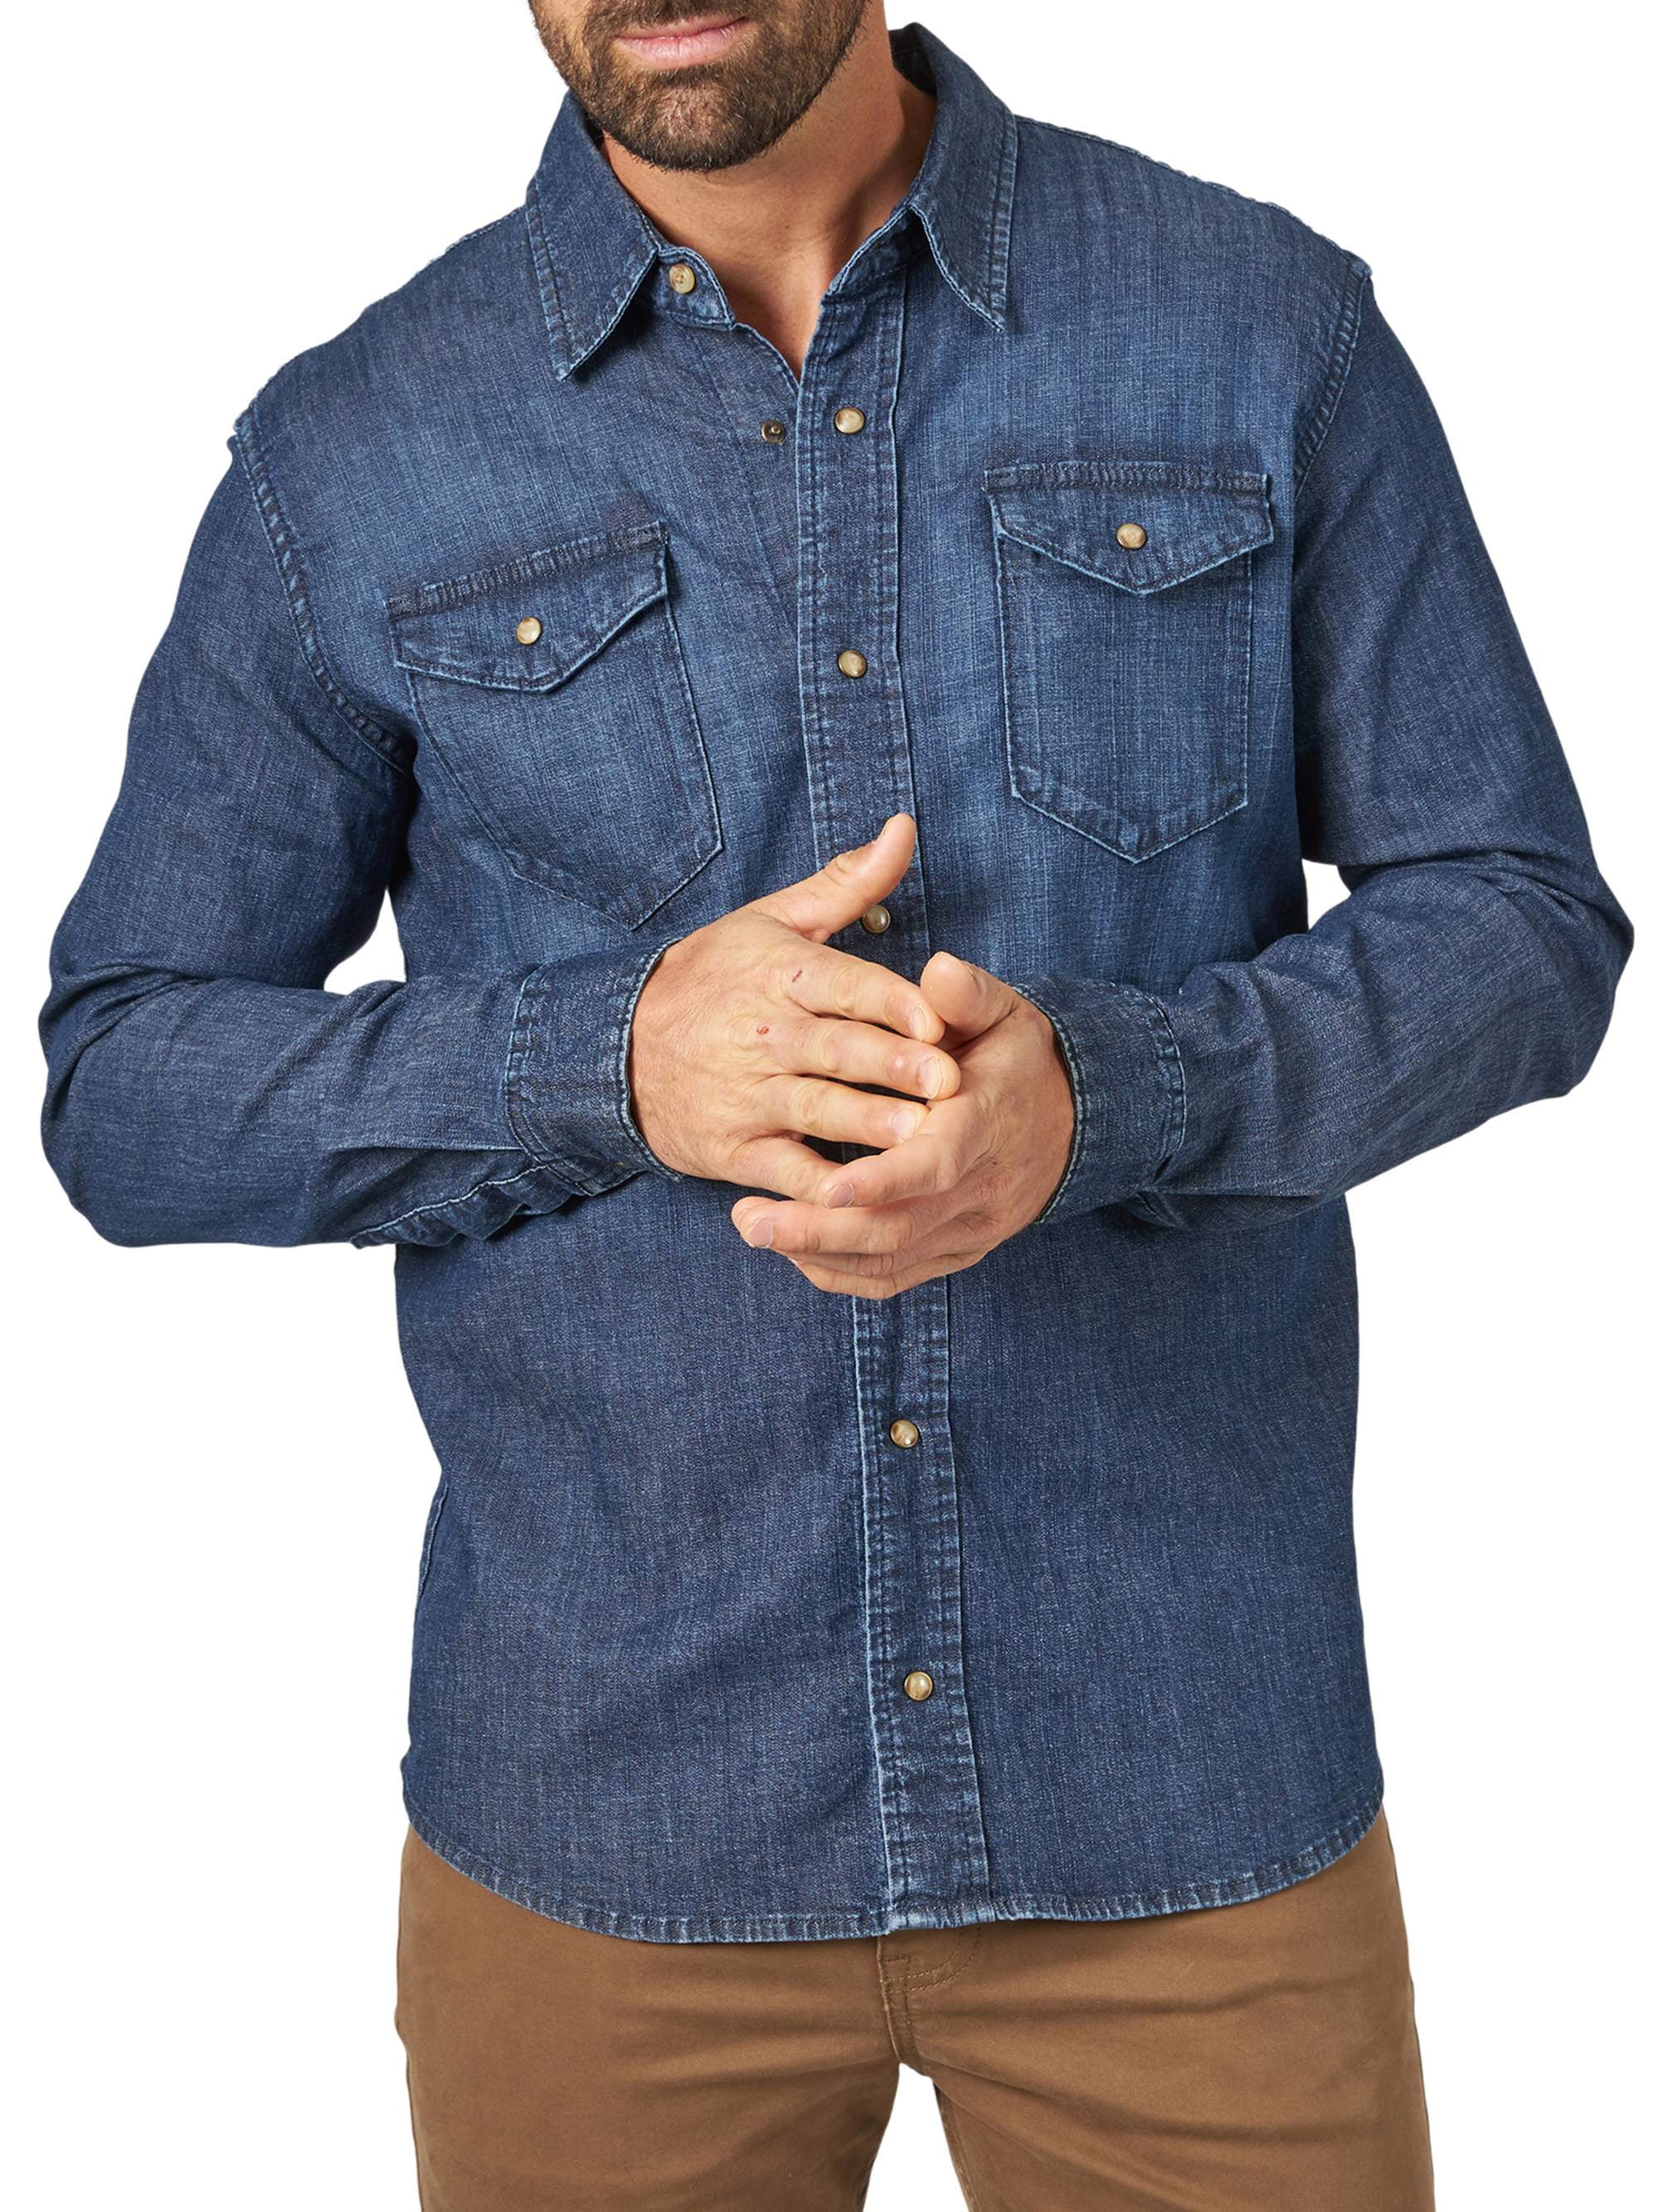 Wrangler Men's Premium Slim Fit Denim Shirt 